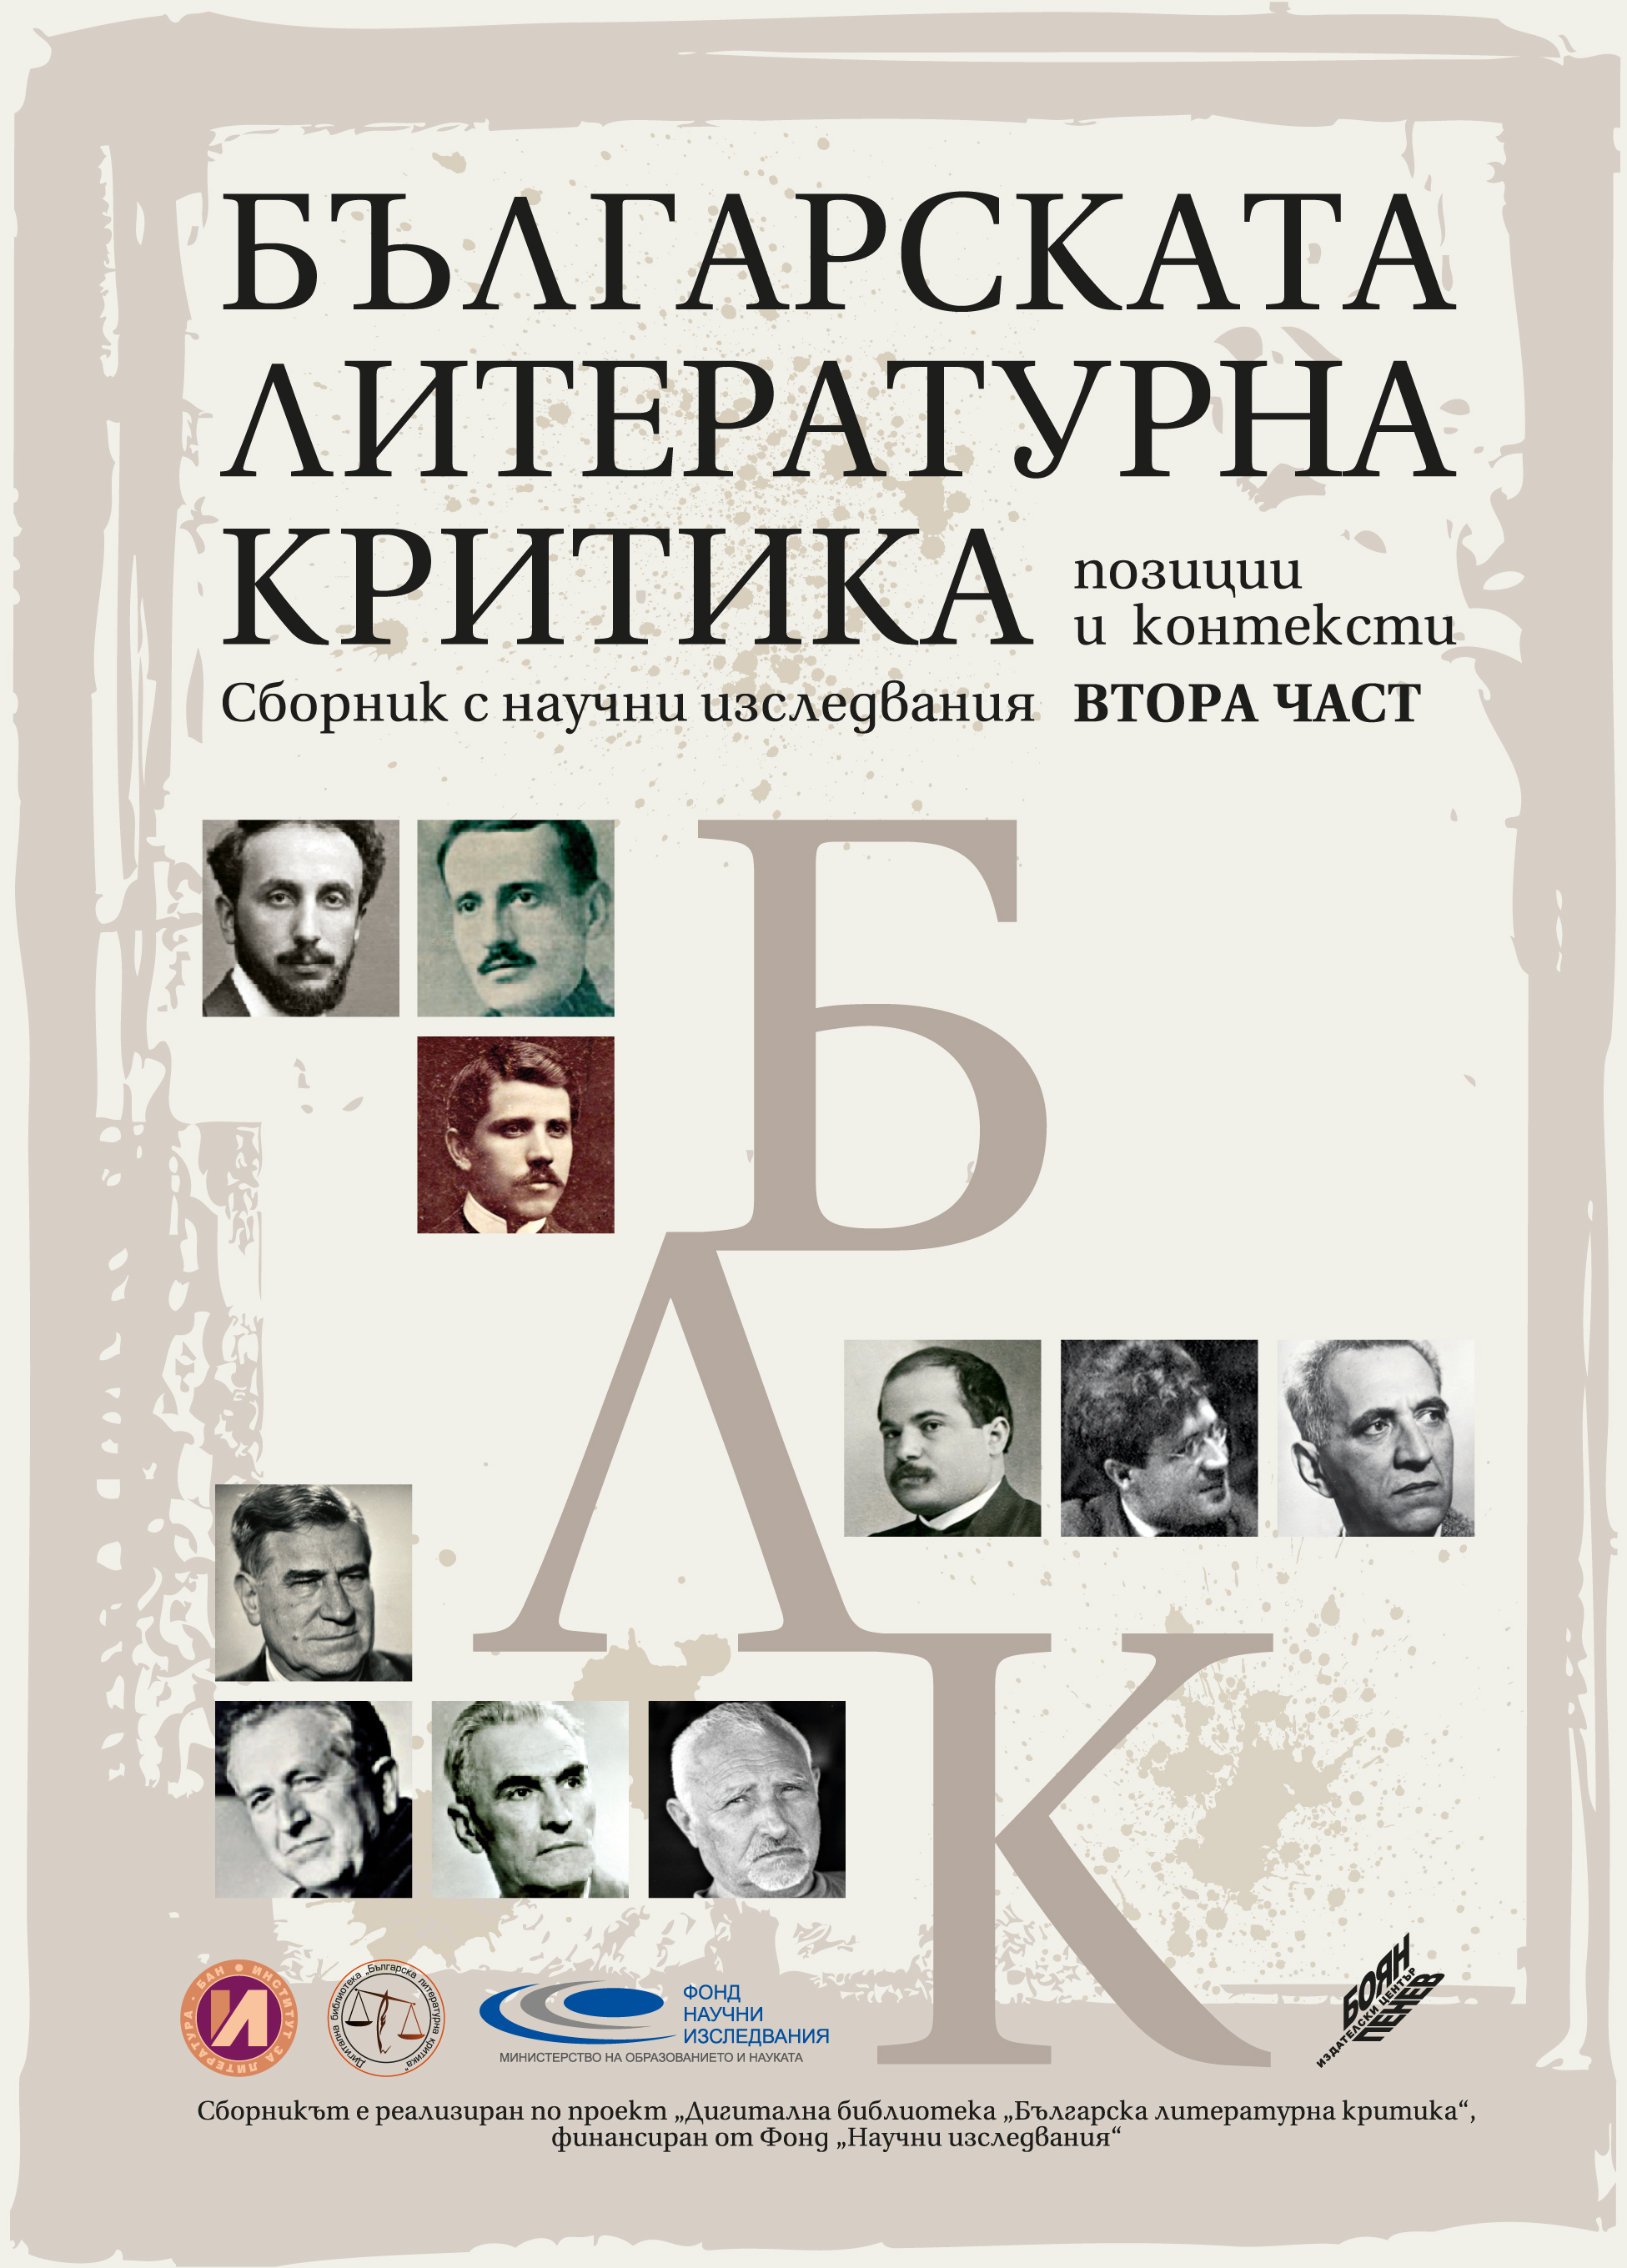 Българската литературна критика - позиции и контексти. Втора част